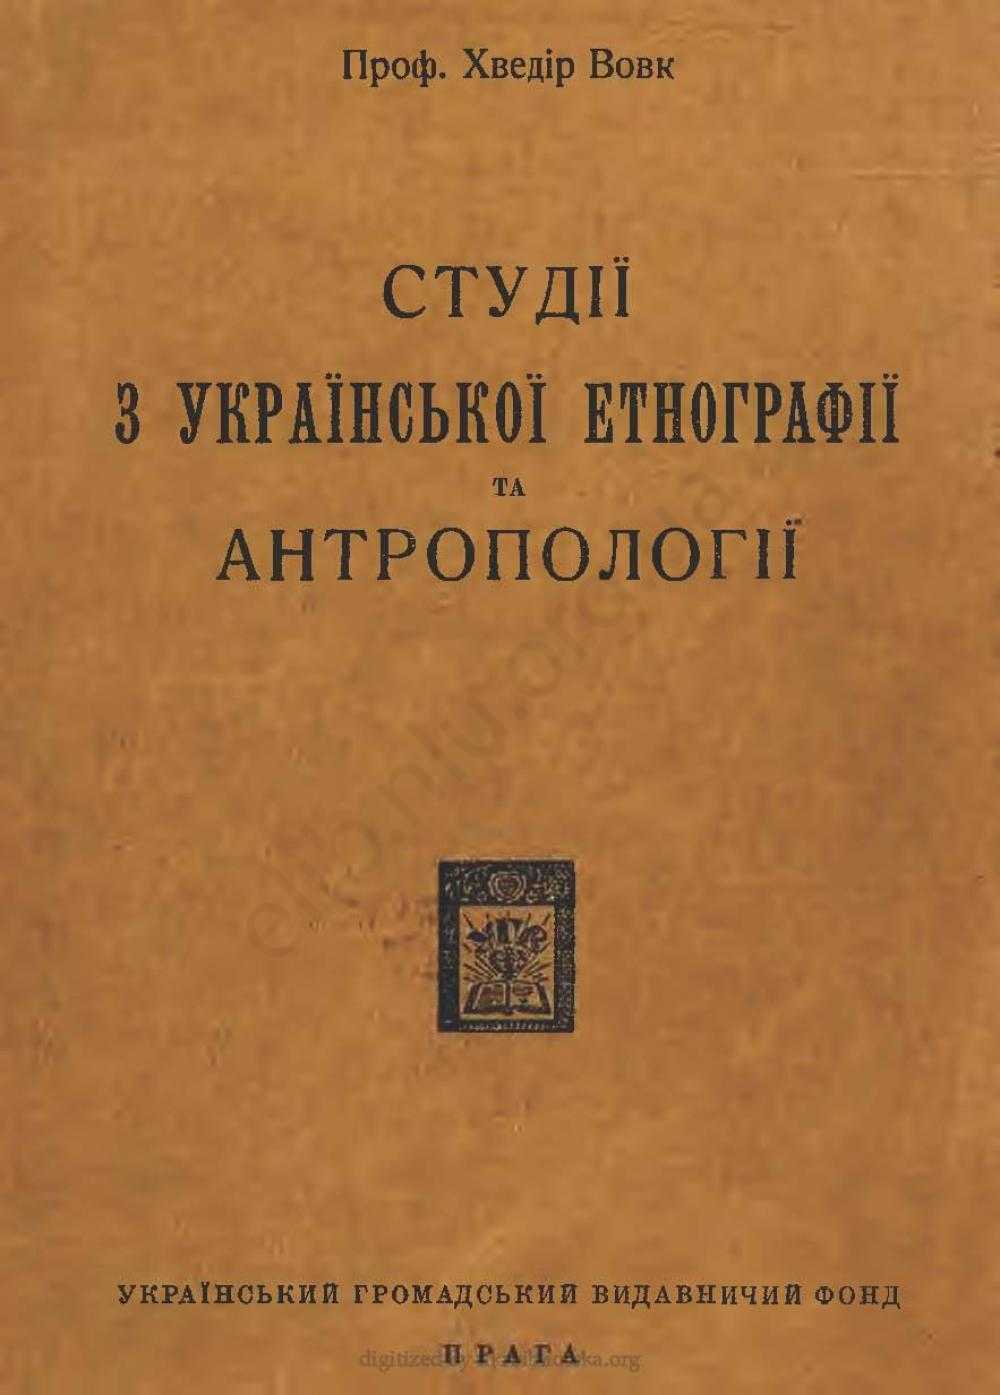 Book Category: Наука ukrbiblioteka.org.